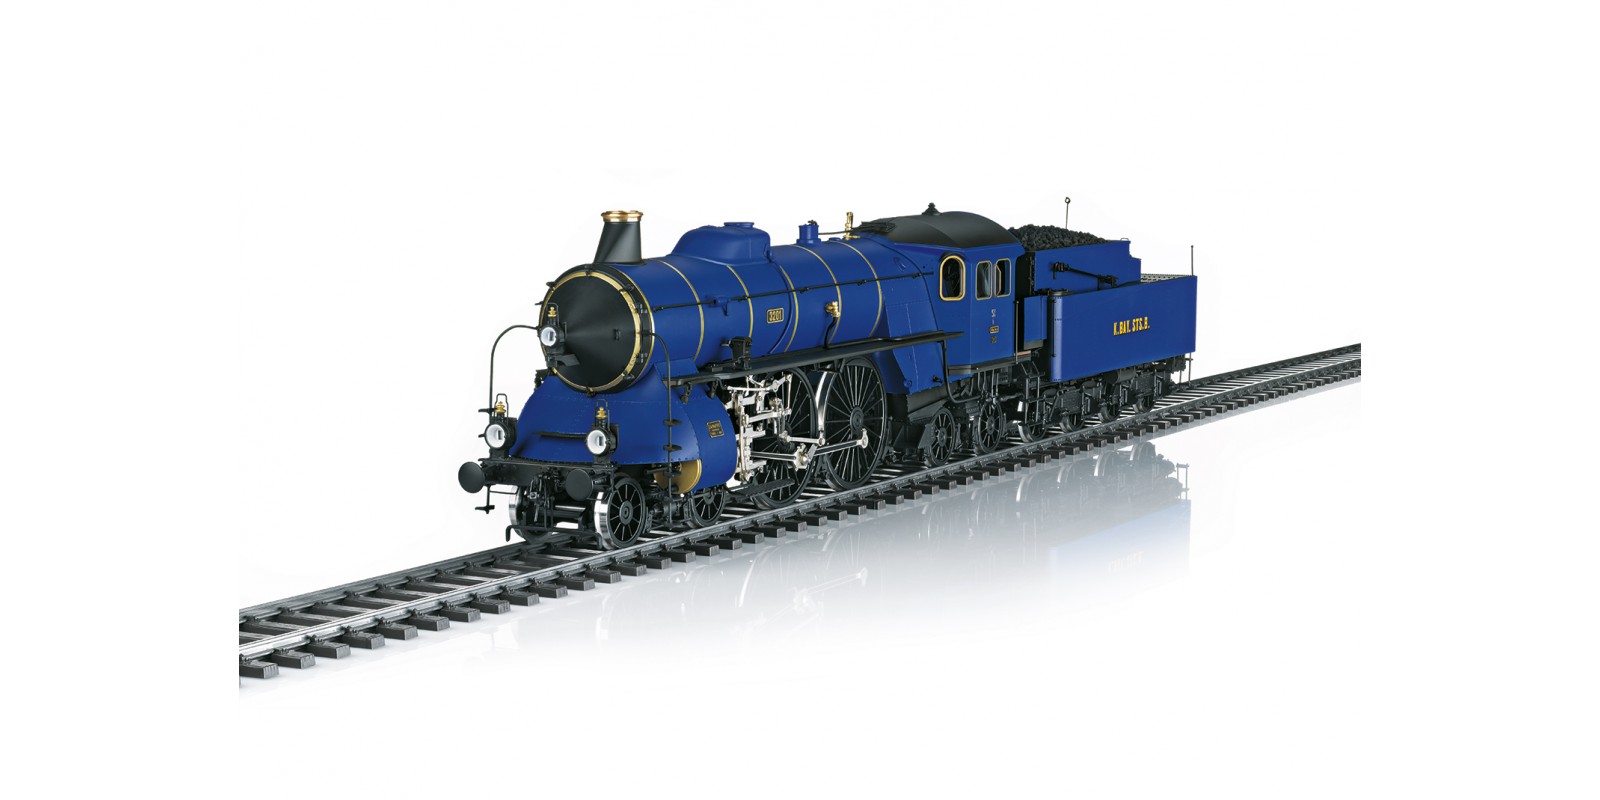 55167 Class S 2/6 Steam Locomotive